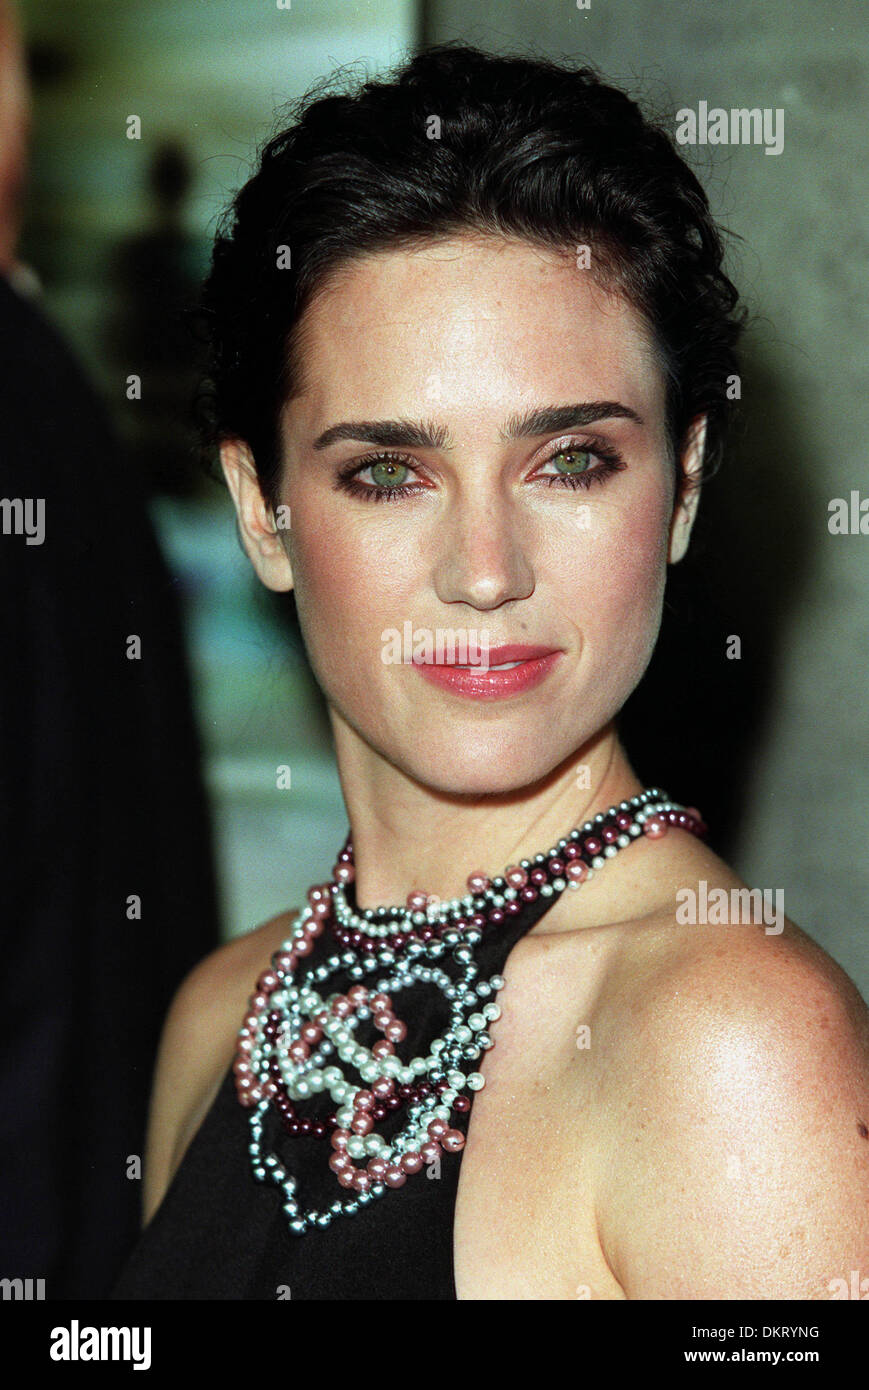 JENNIFER CONNELLY.La actriz.LOS ANGELES, EE.UU.13/12/2001.BN88E35A Foto de stock